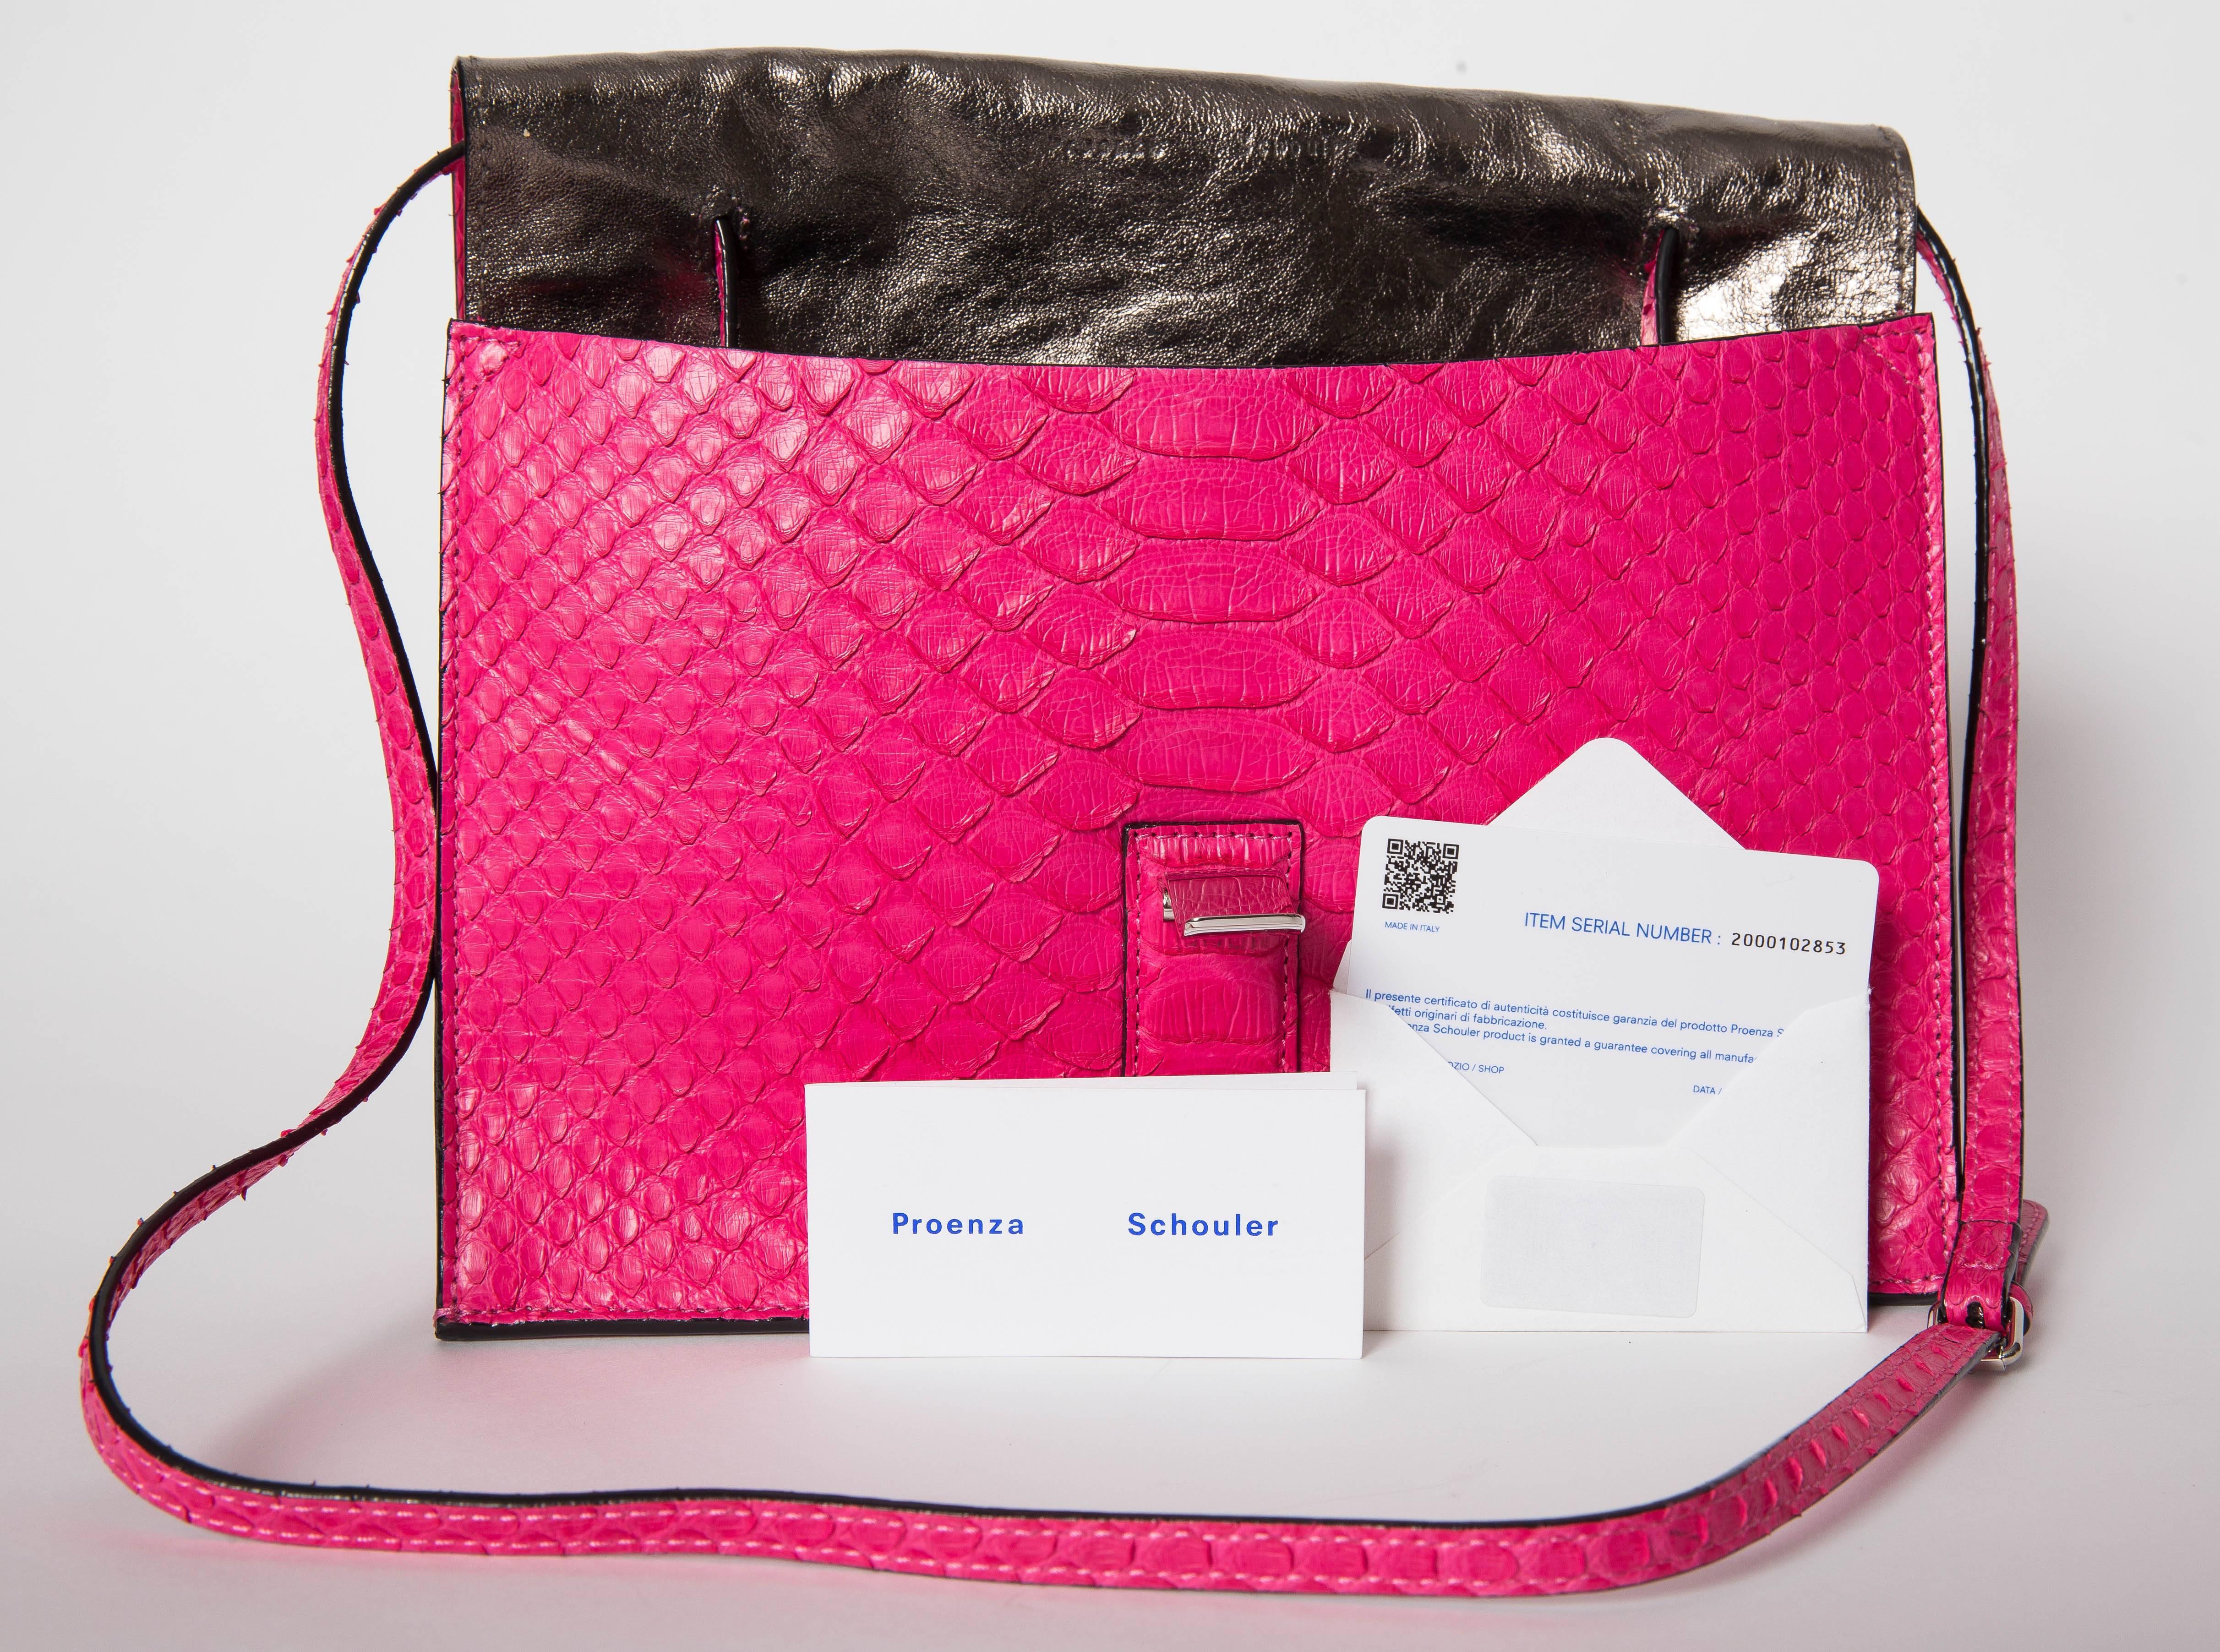 Proenza Schouler Hot Pink Python Shoulder Bag with Palladium Hardware For Sale 2